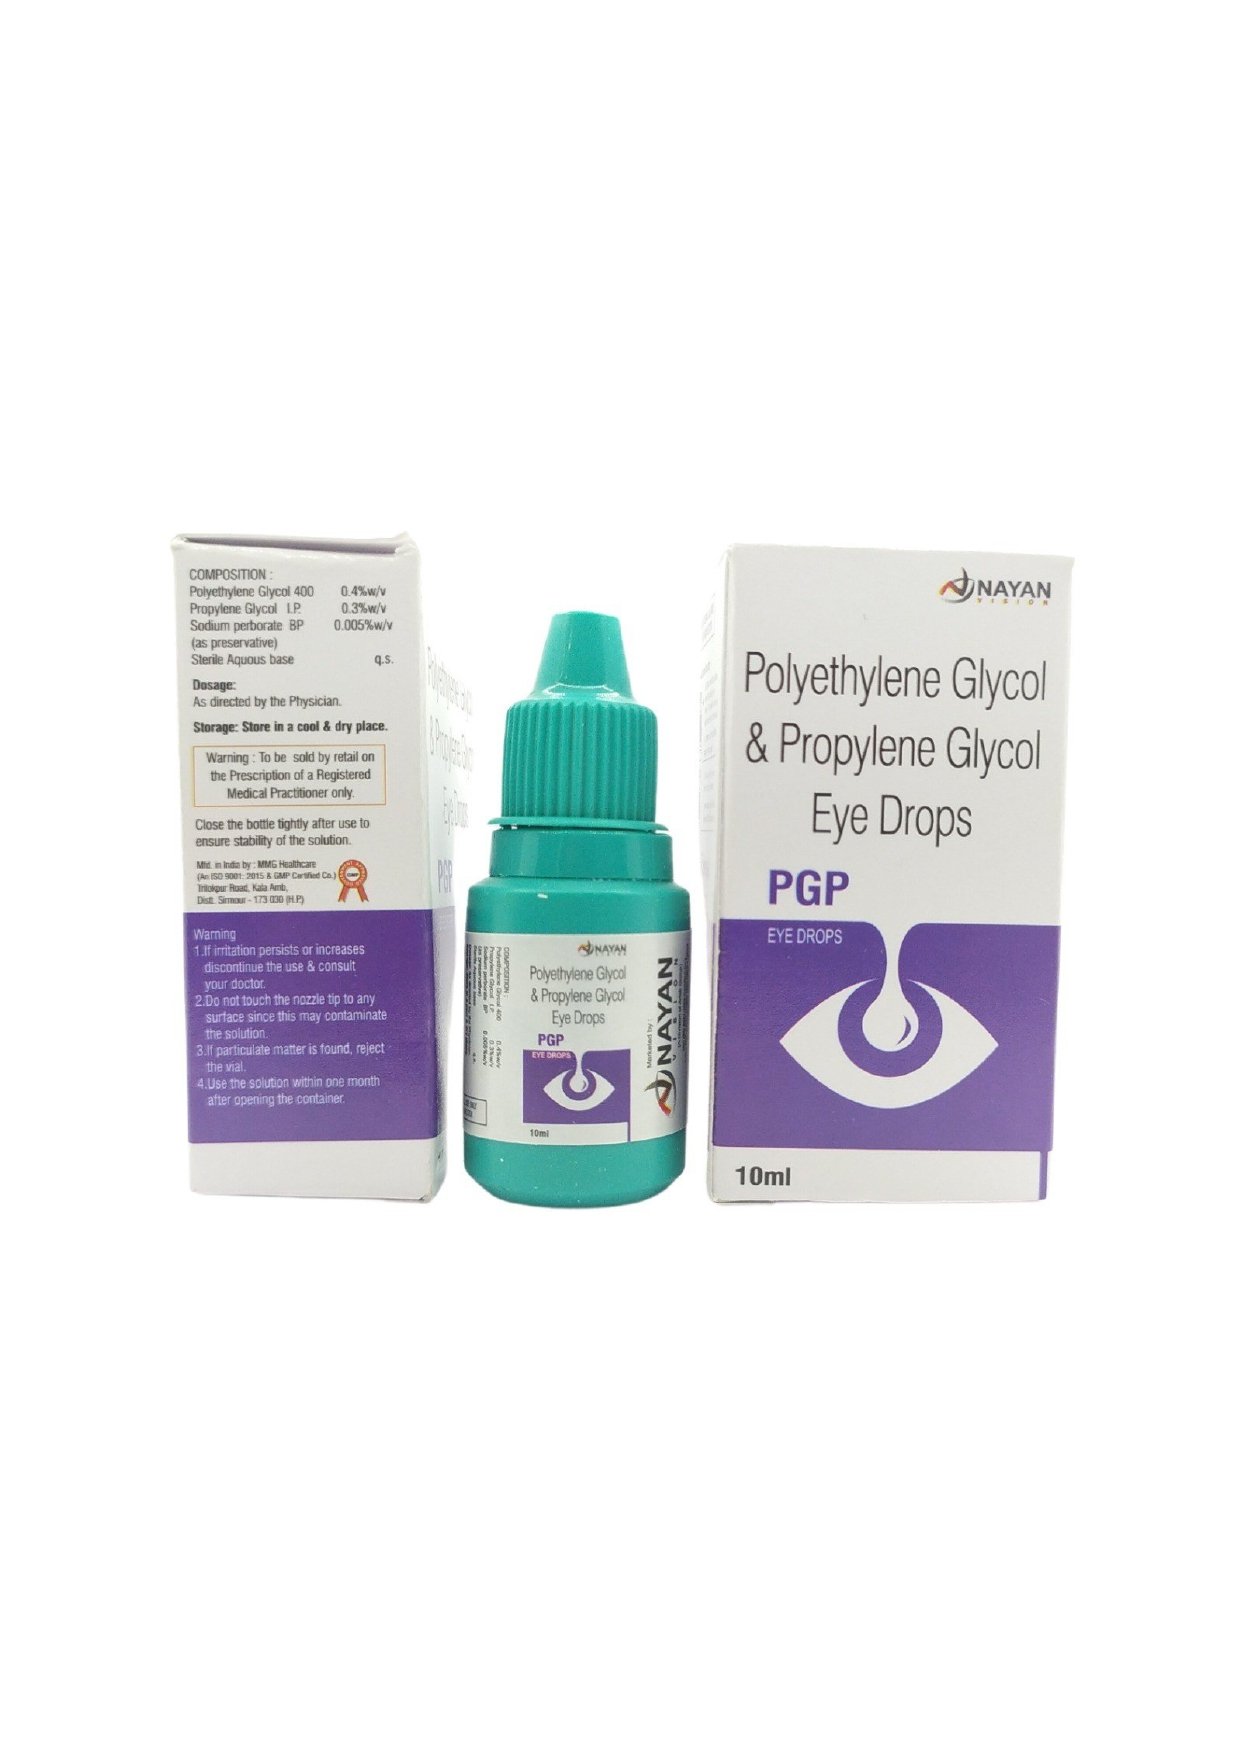 PGP - Polyethylene Glycol 0.4% Propylene Glycol 0.3%  Eye Drops